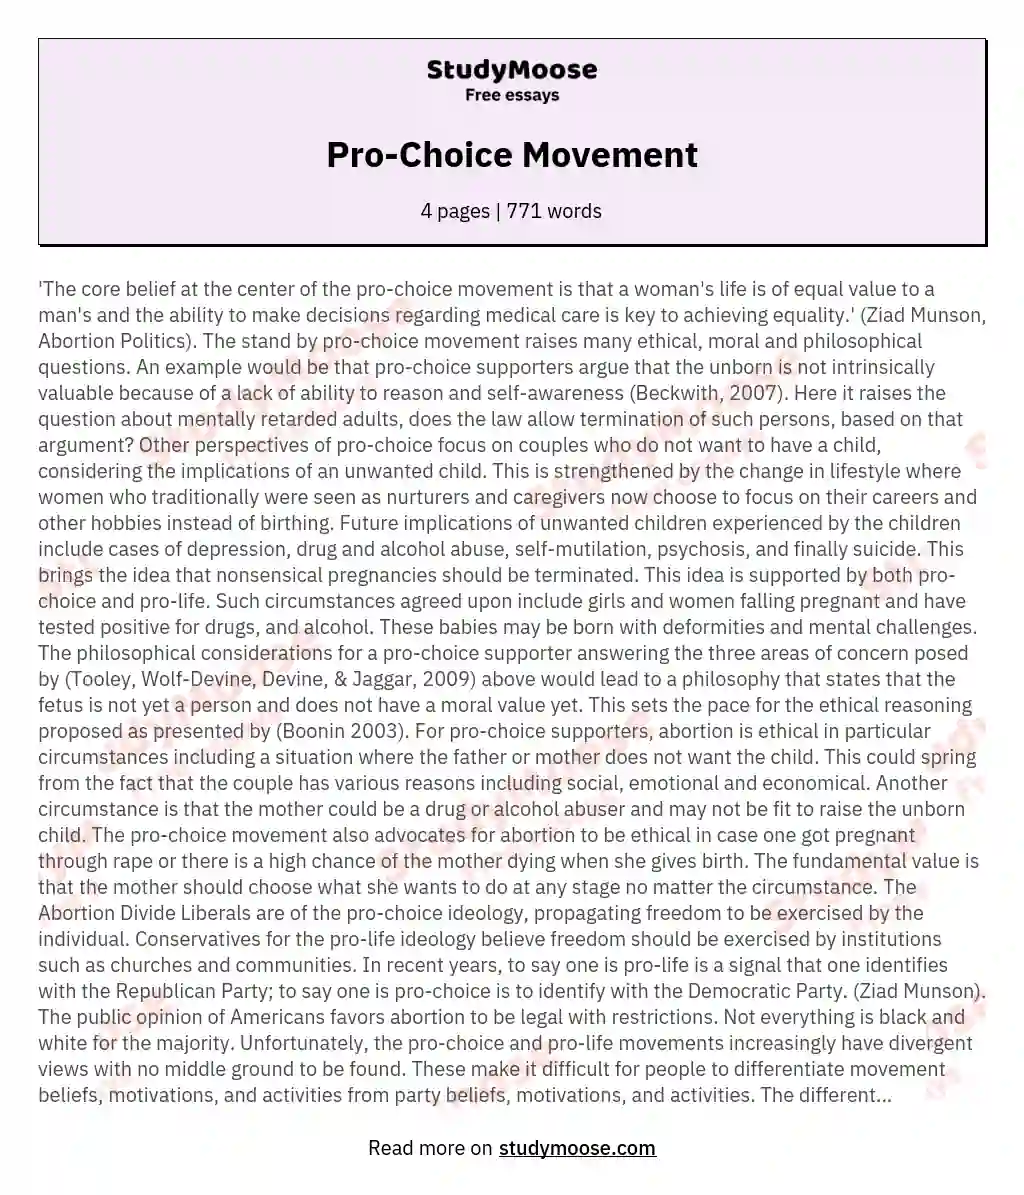 Pro-Choice Movement essay